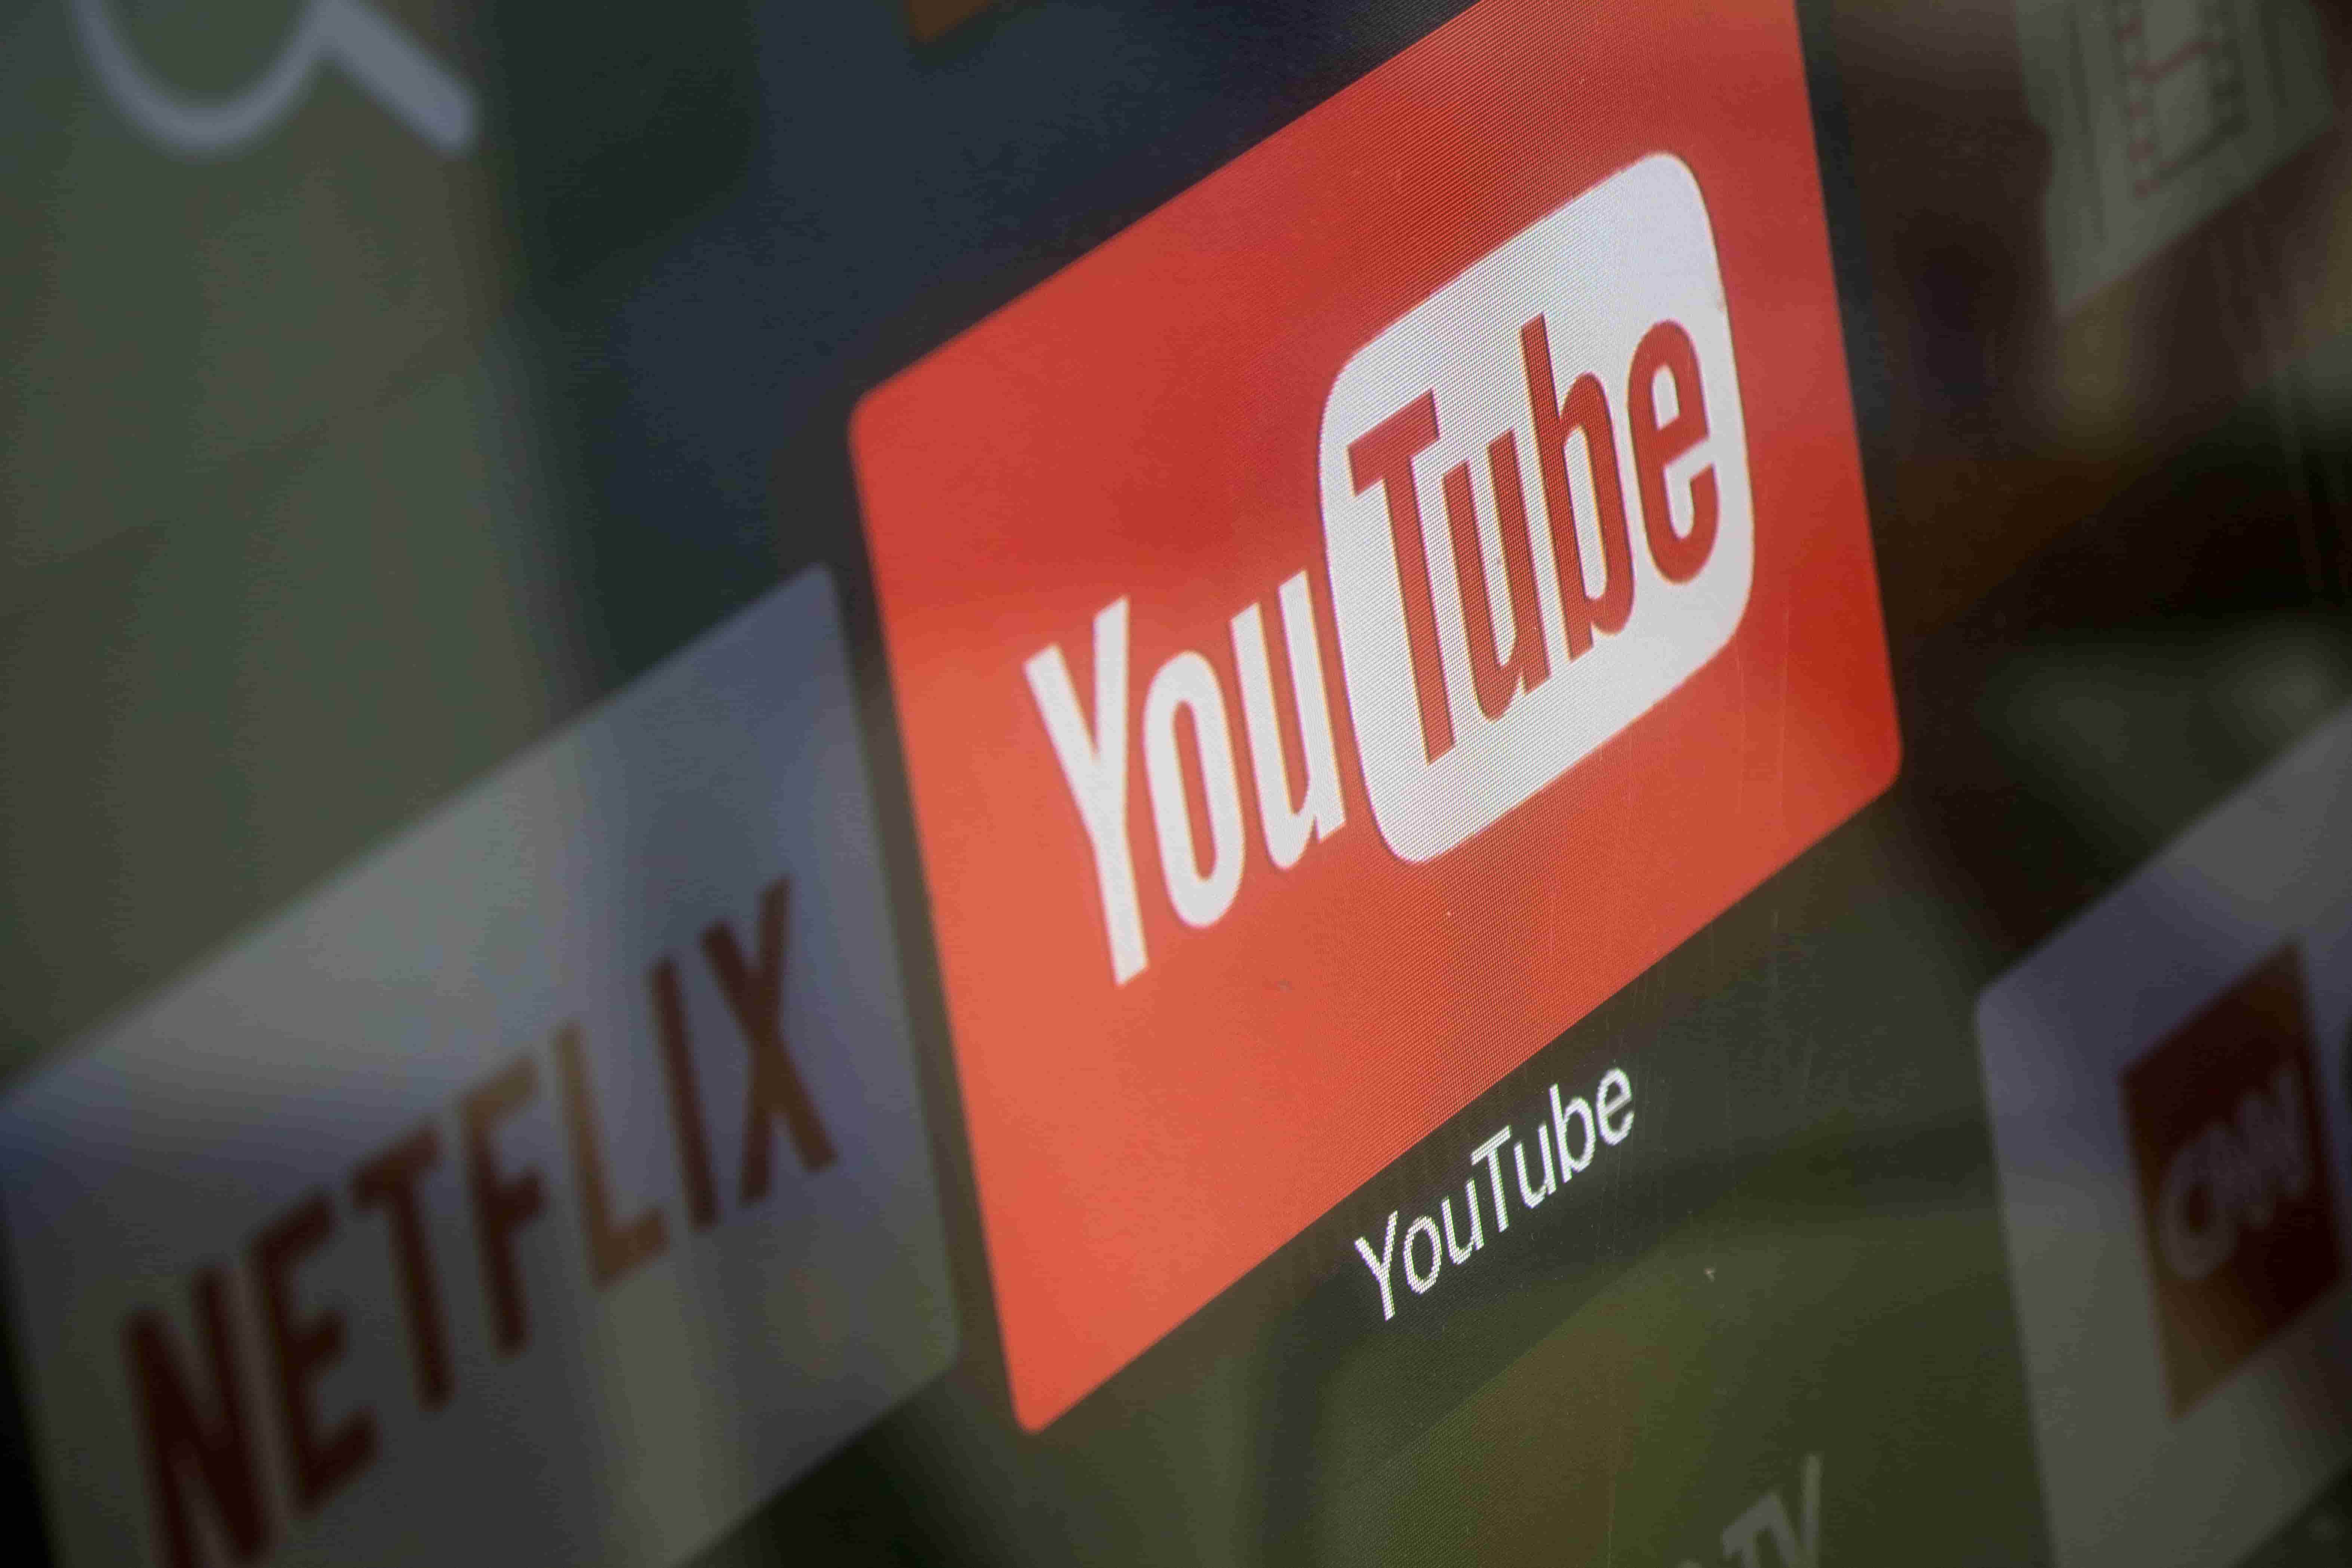 YouTuber Ruby Franke Sentenced to Prison for Child Abuse